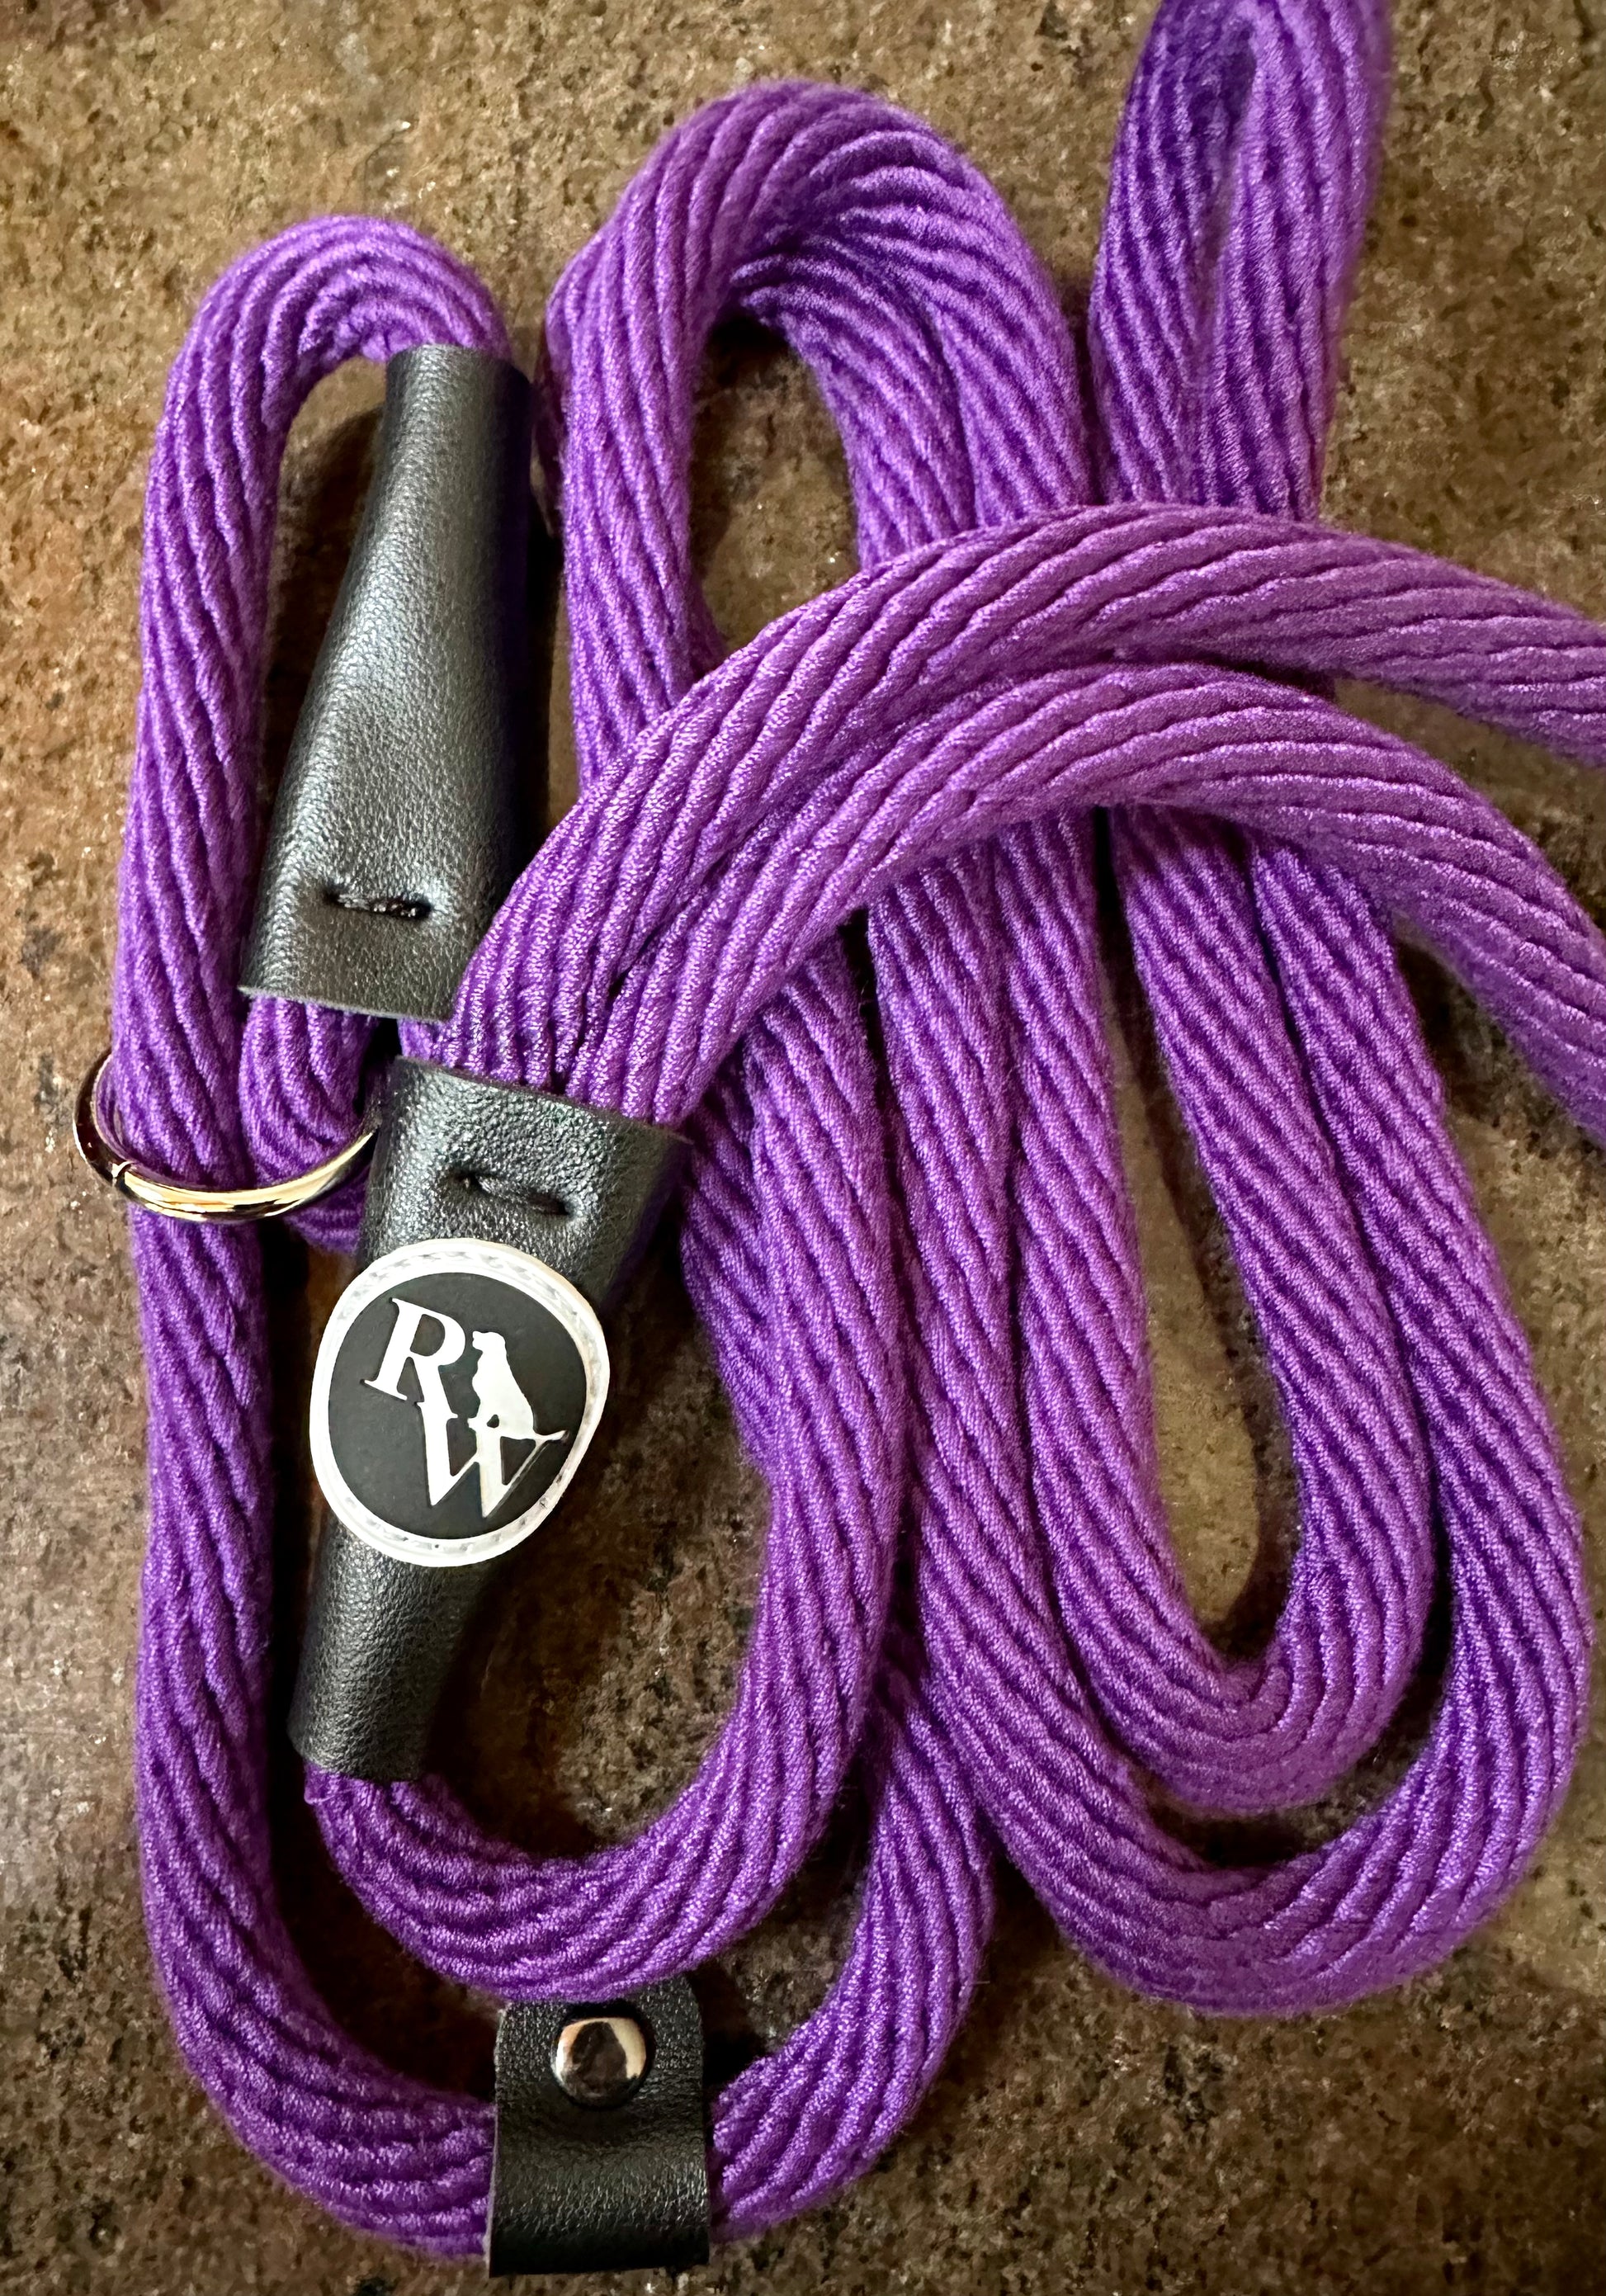 RetrieverWorx purple British slip lead for retriever training